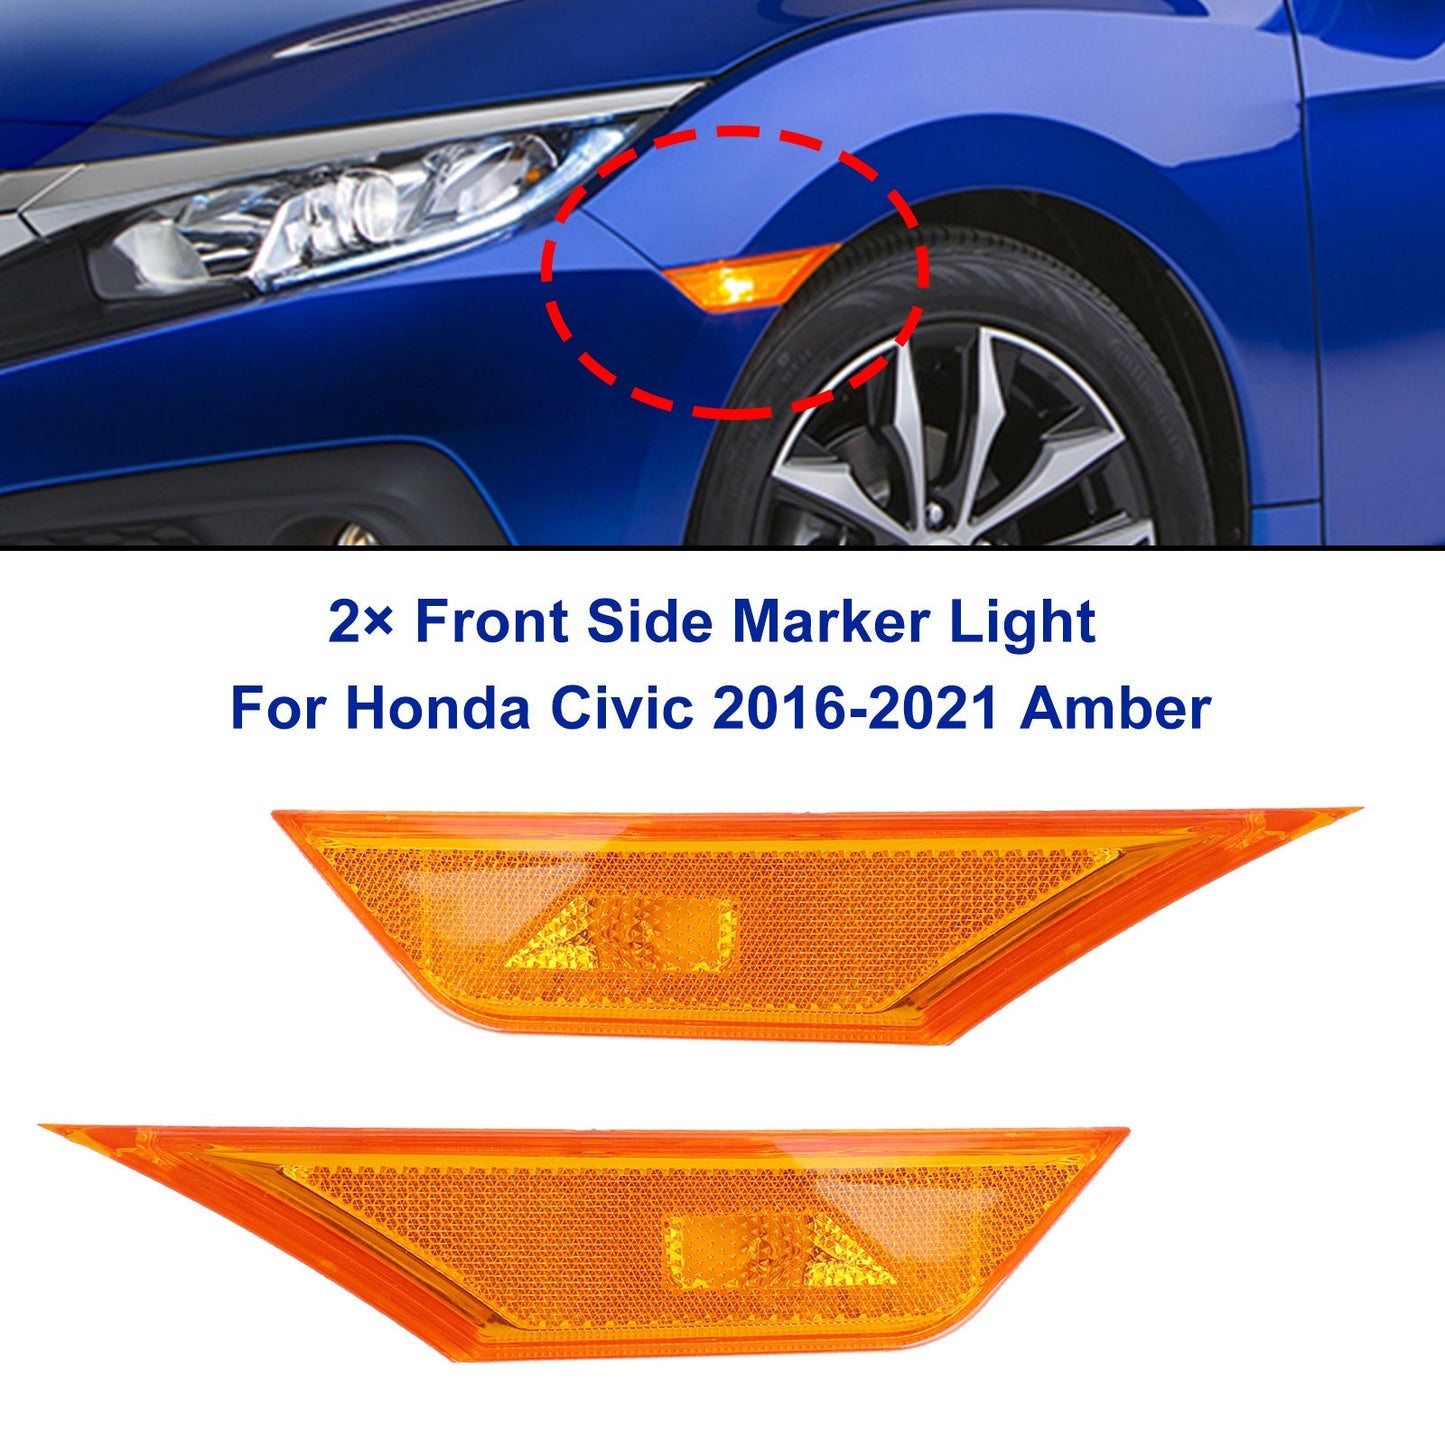 2× Front Side Marker Light For Honda Civic 2016-2021 Amber